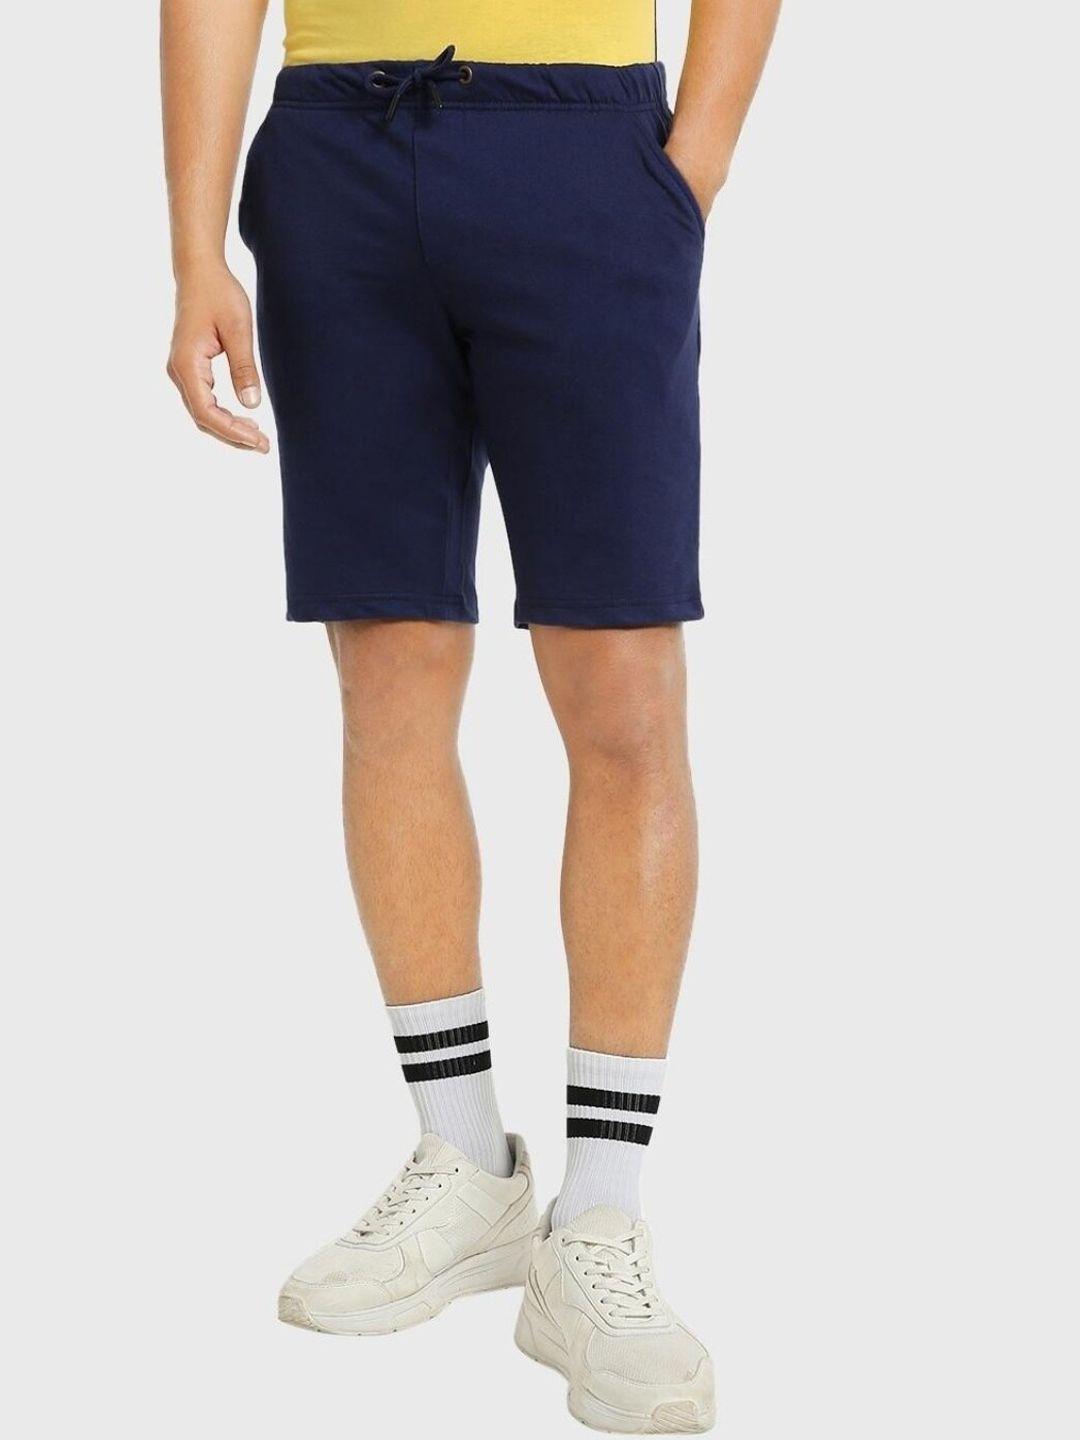 bewakoof-men-mid-raise-regular-shorts